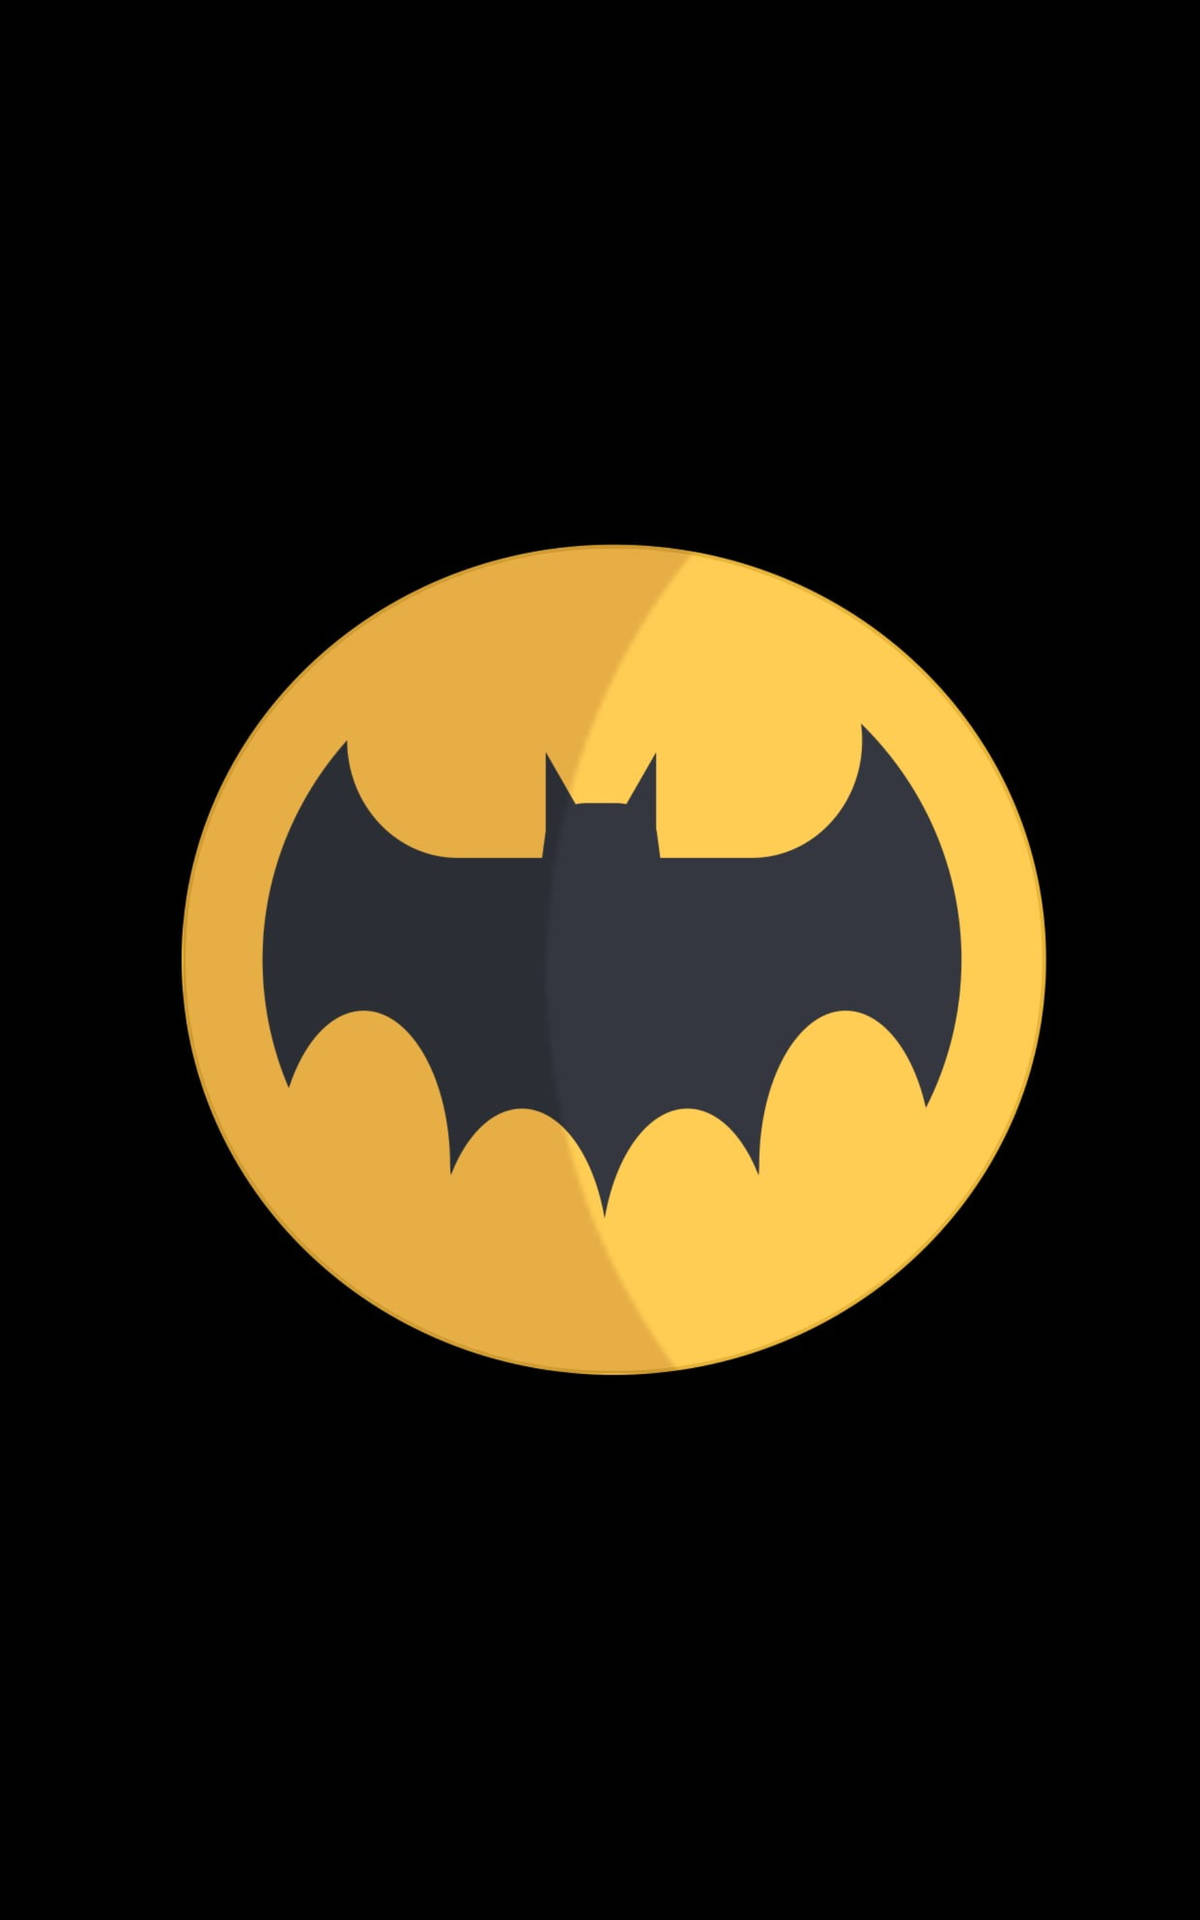 Classic Batman Logoon Black Background.jpg